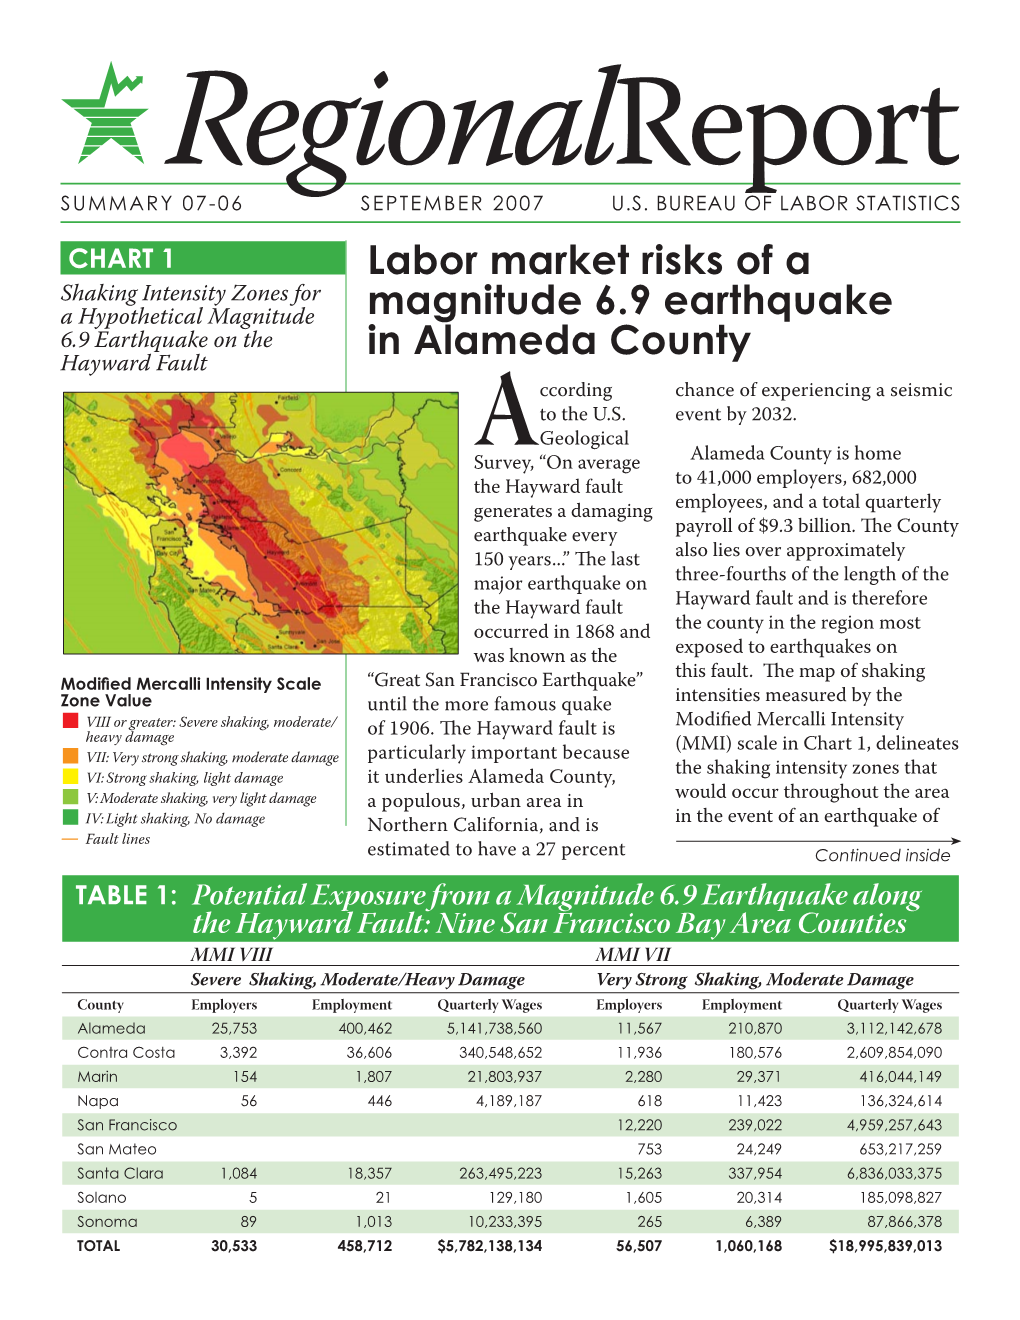 Regional Report: Labor Market Risks of a Magnitude 6.9 Earthquake in Alameda County